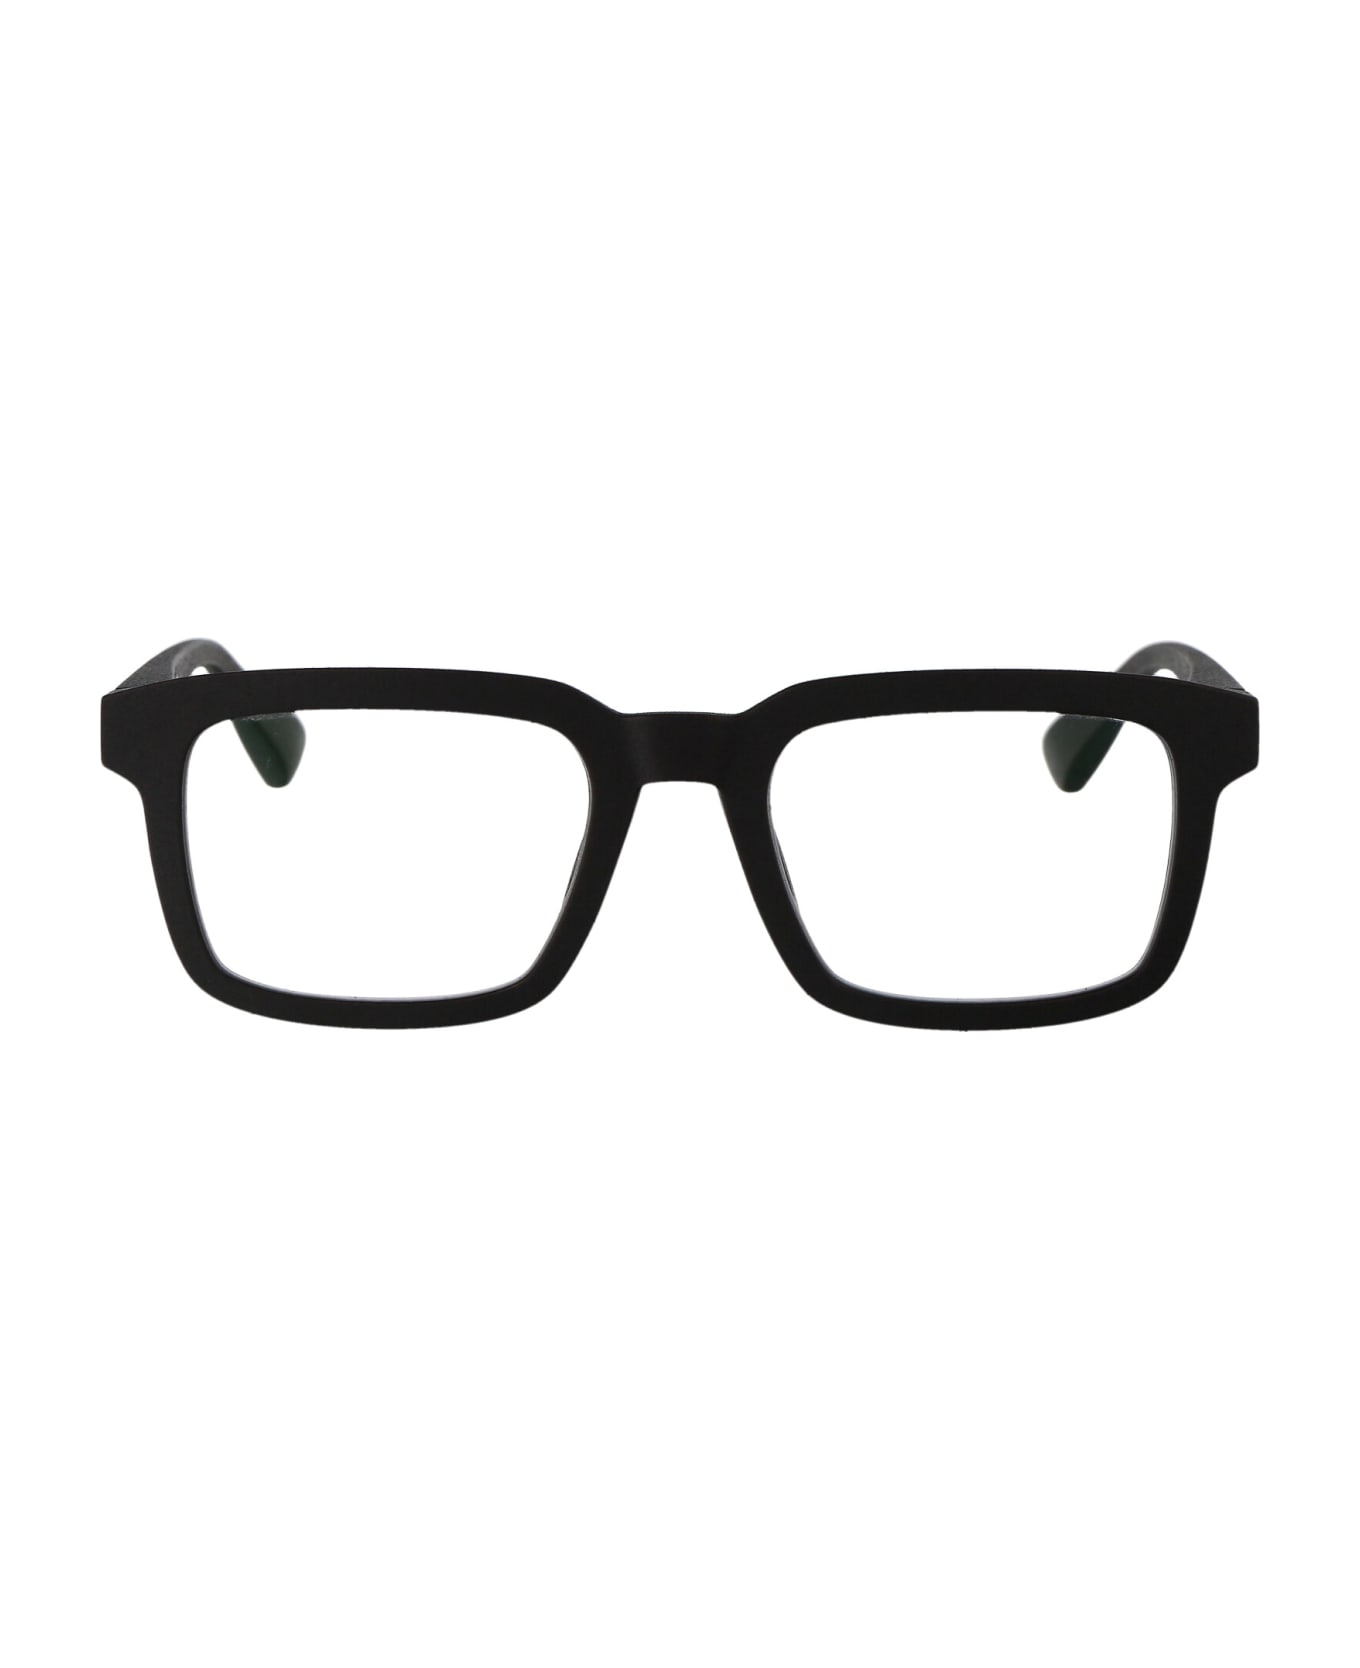 Mykita Canna Glasses - 354 MD1-Pitch Black Clear アイウェア